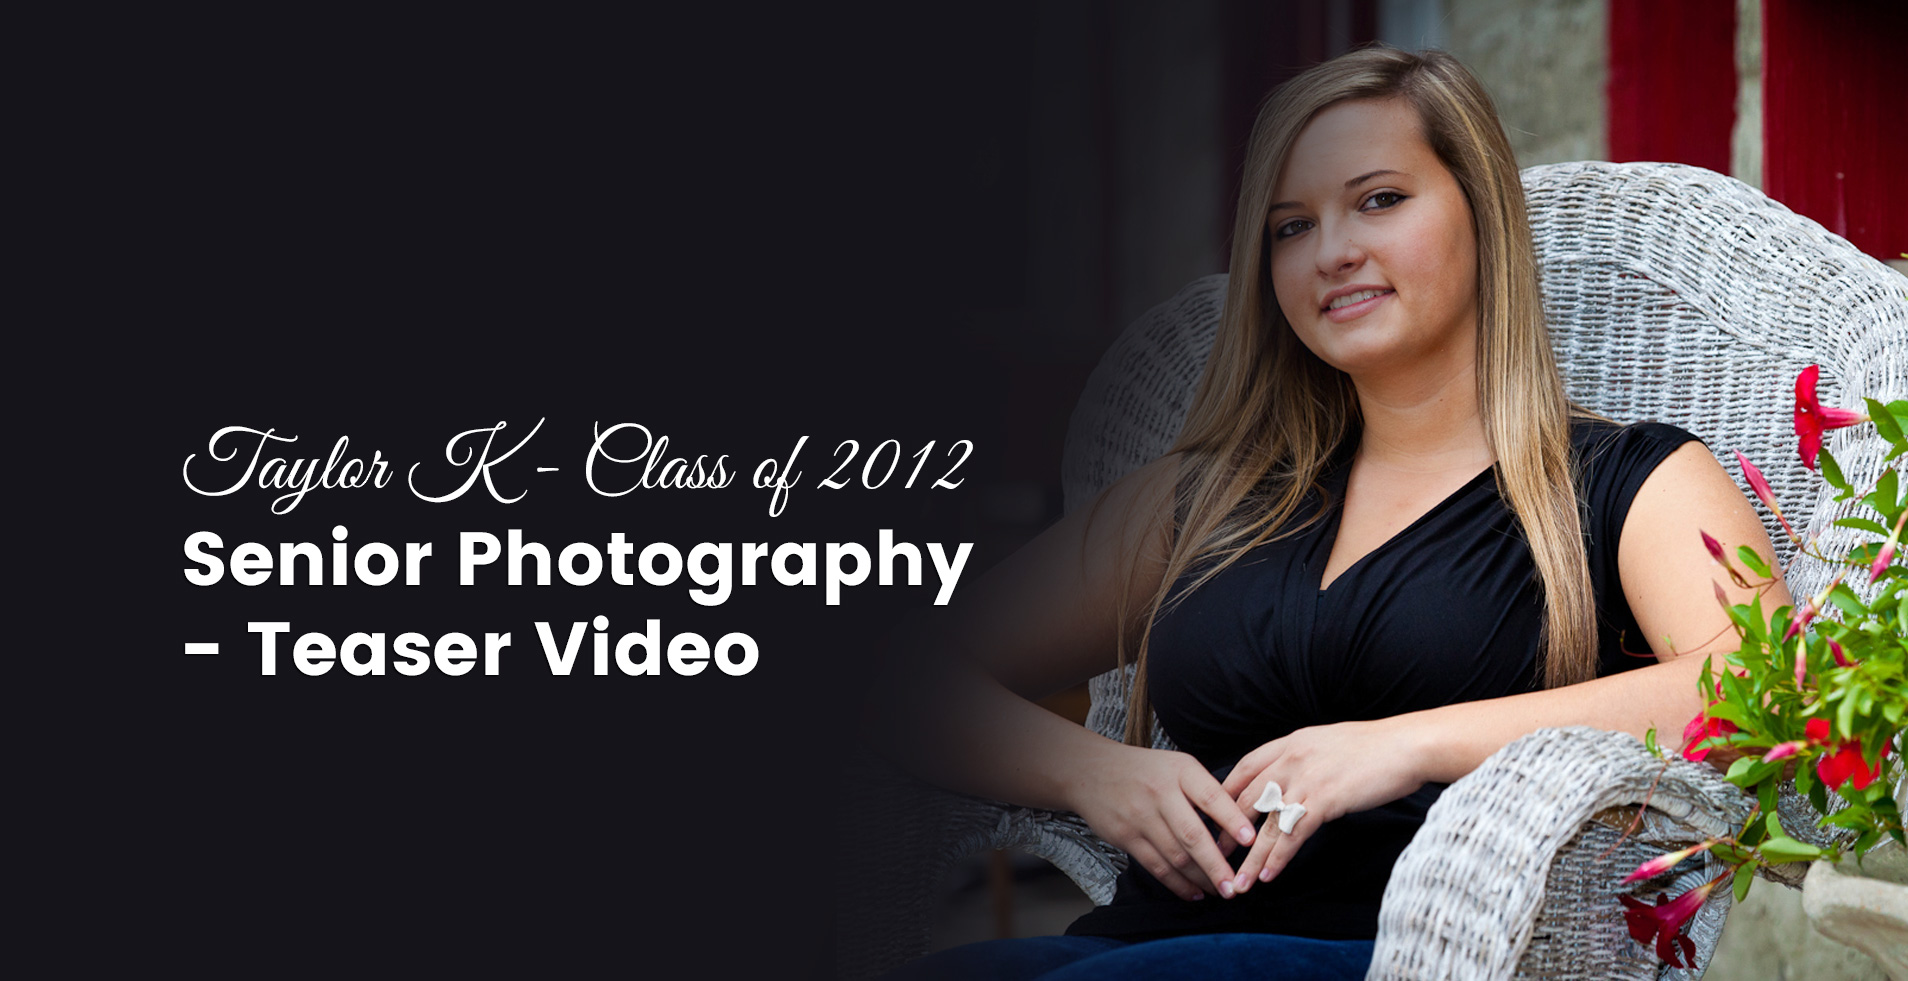 Taylor K - Class of 2012 - Senior Photography - Teaser Video